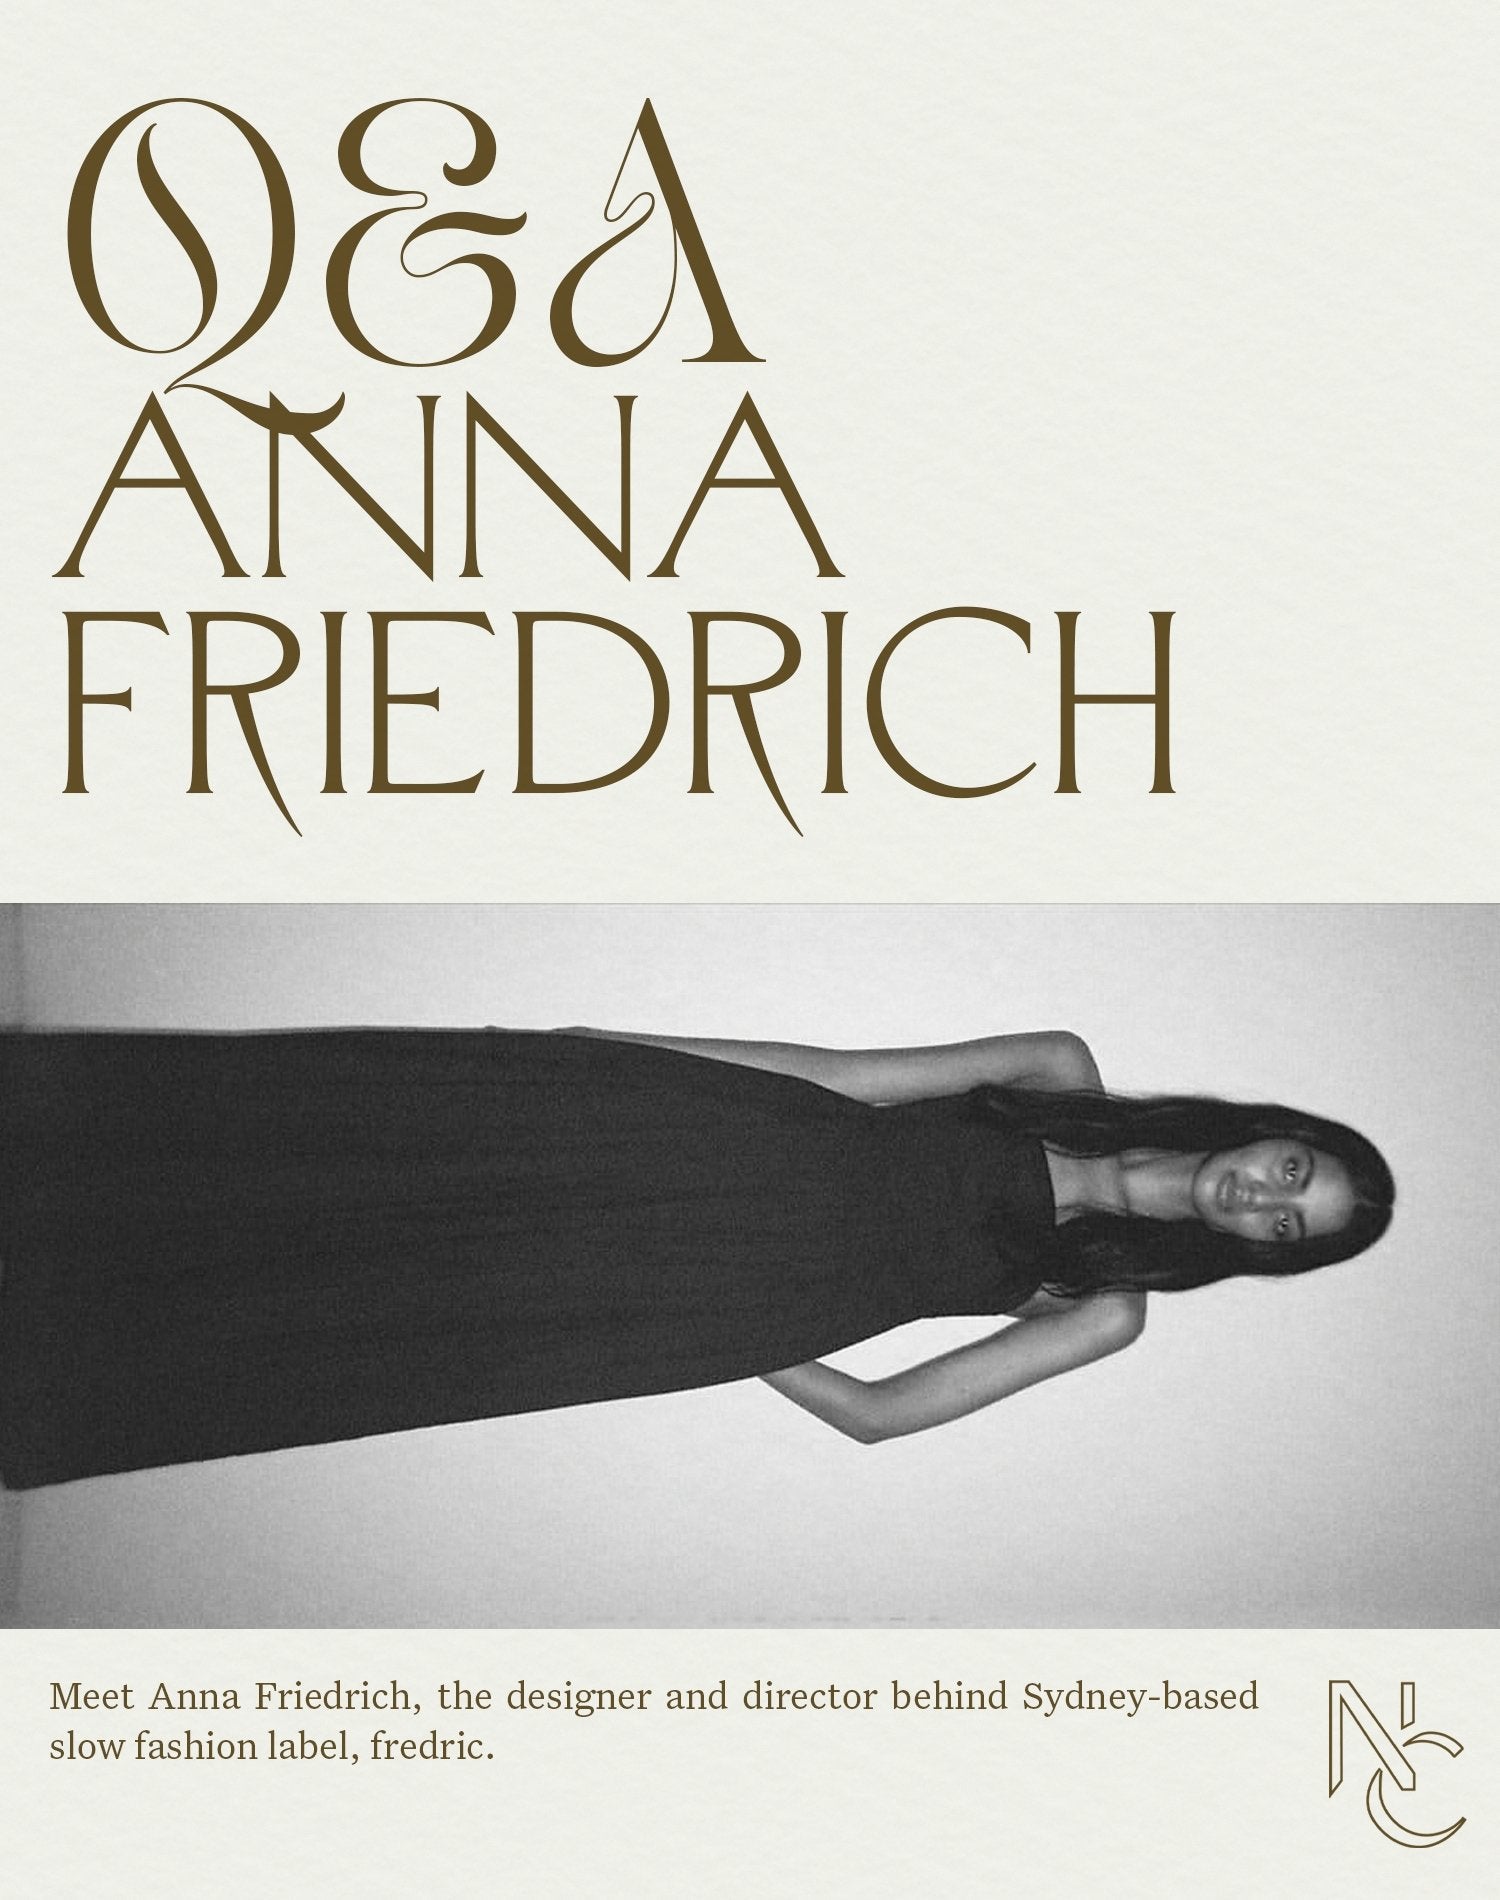 Q&A • Anna Friedrich of fredric